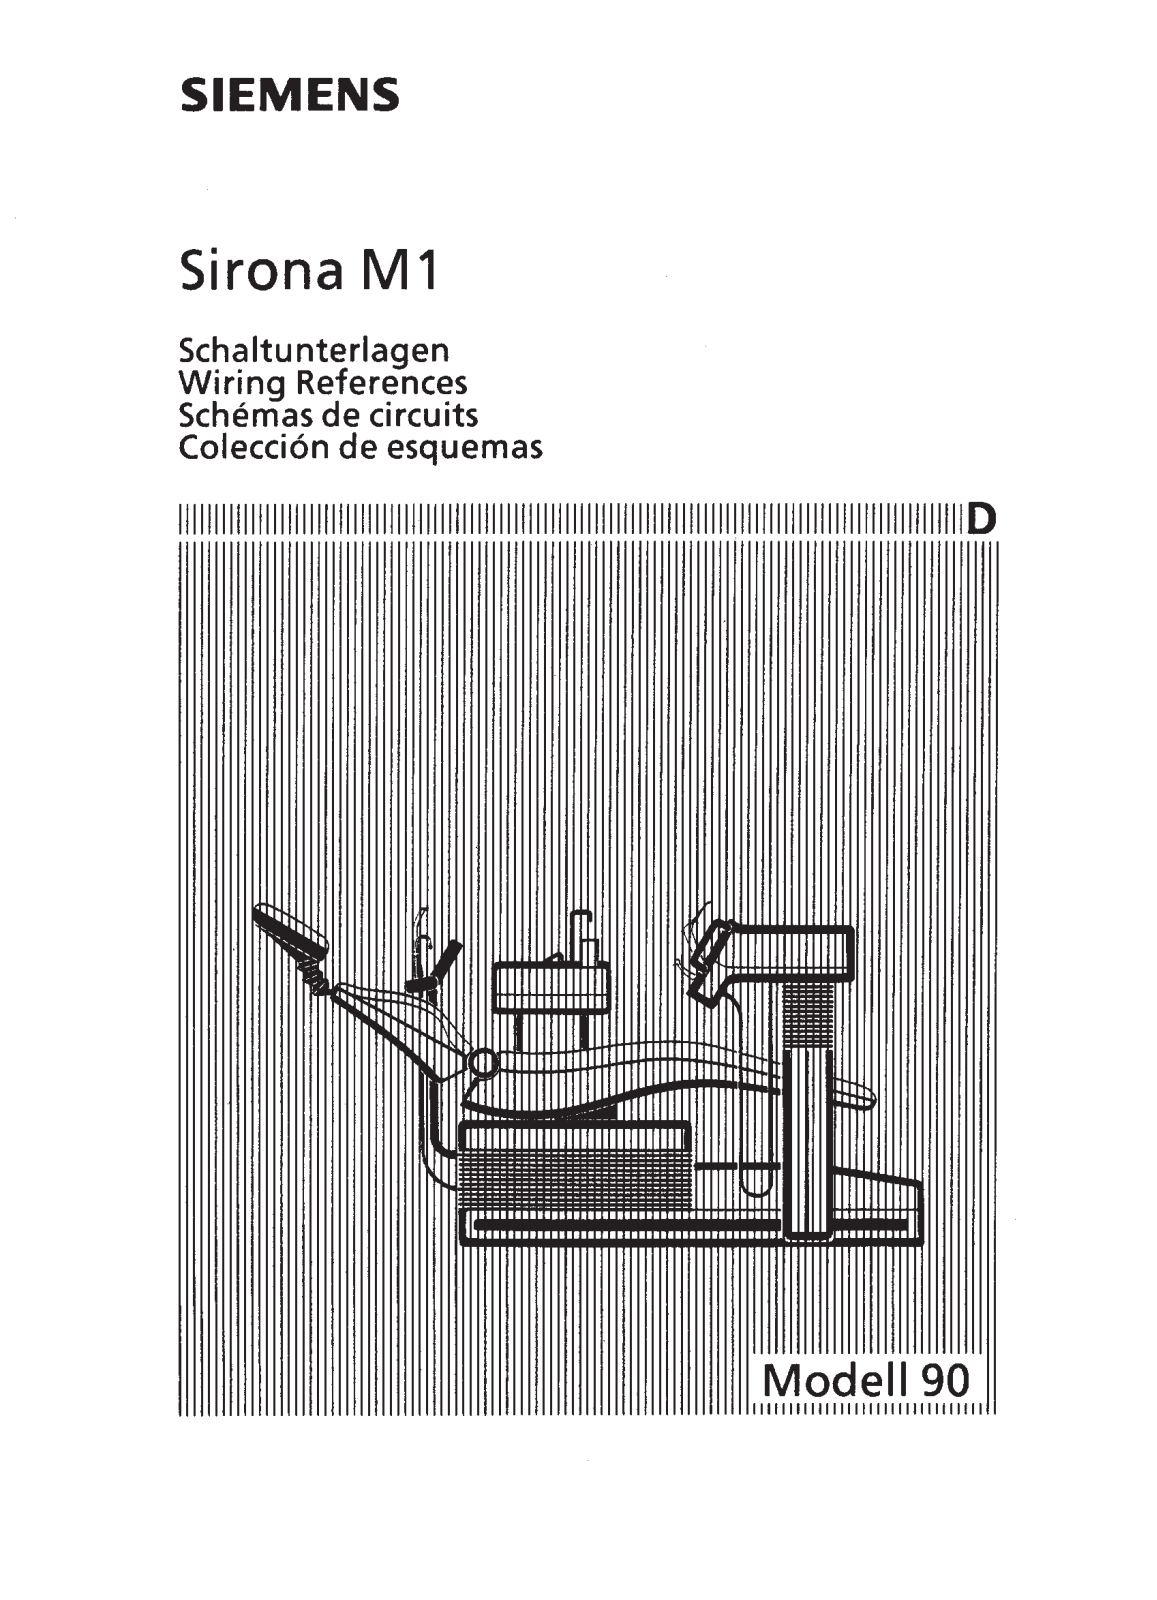 Siemens Sirona M1 Circuit diagrams